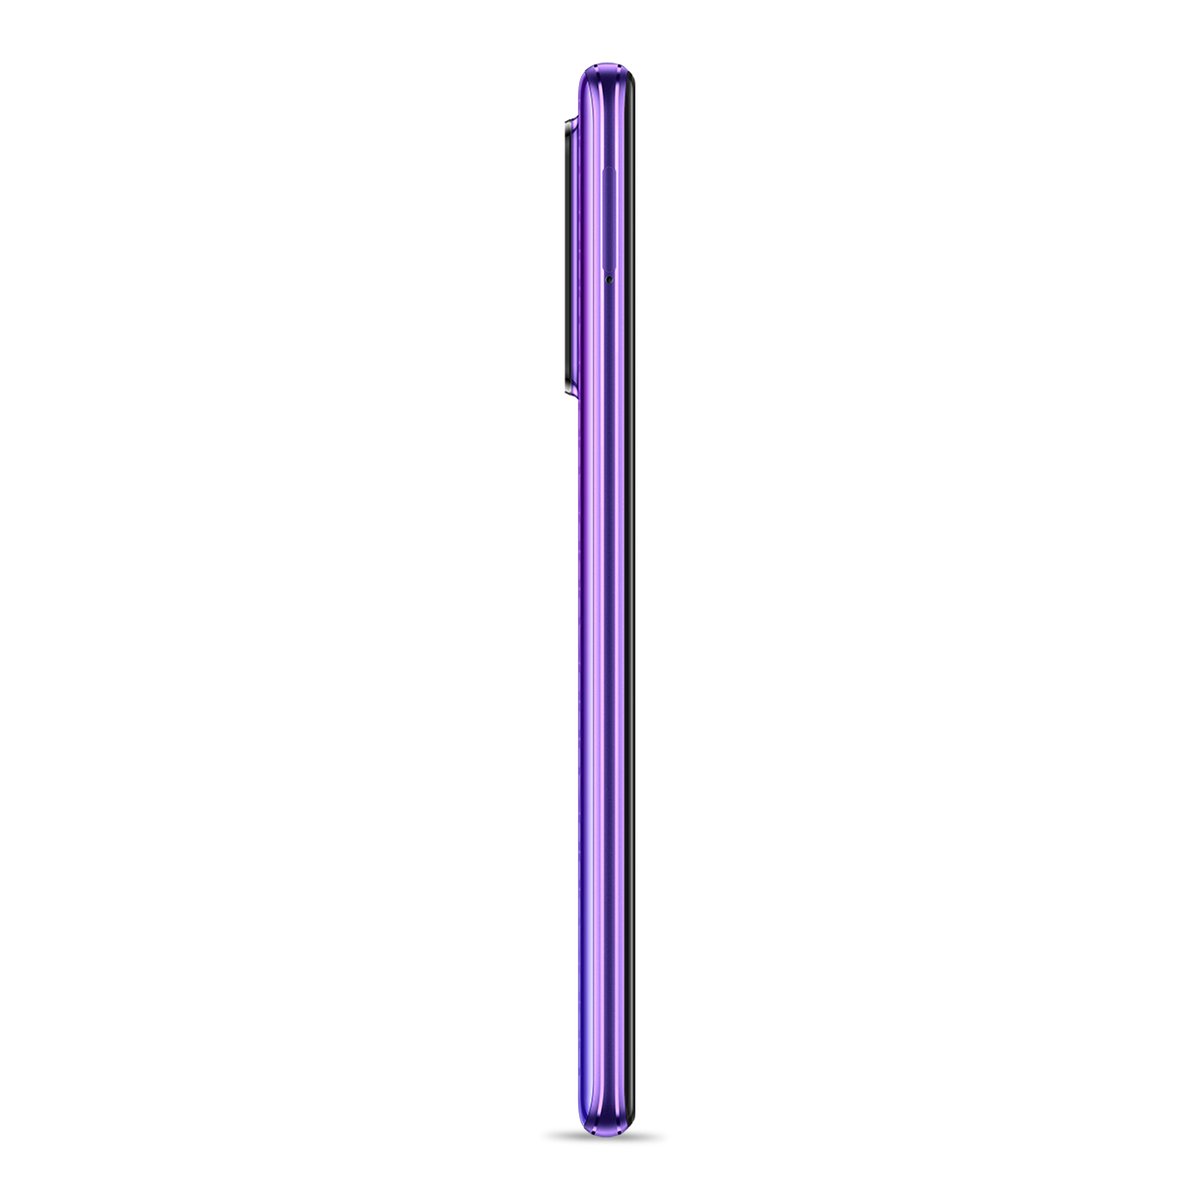 Huawei nova 7 SE 5G Midsummer Purple